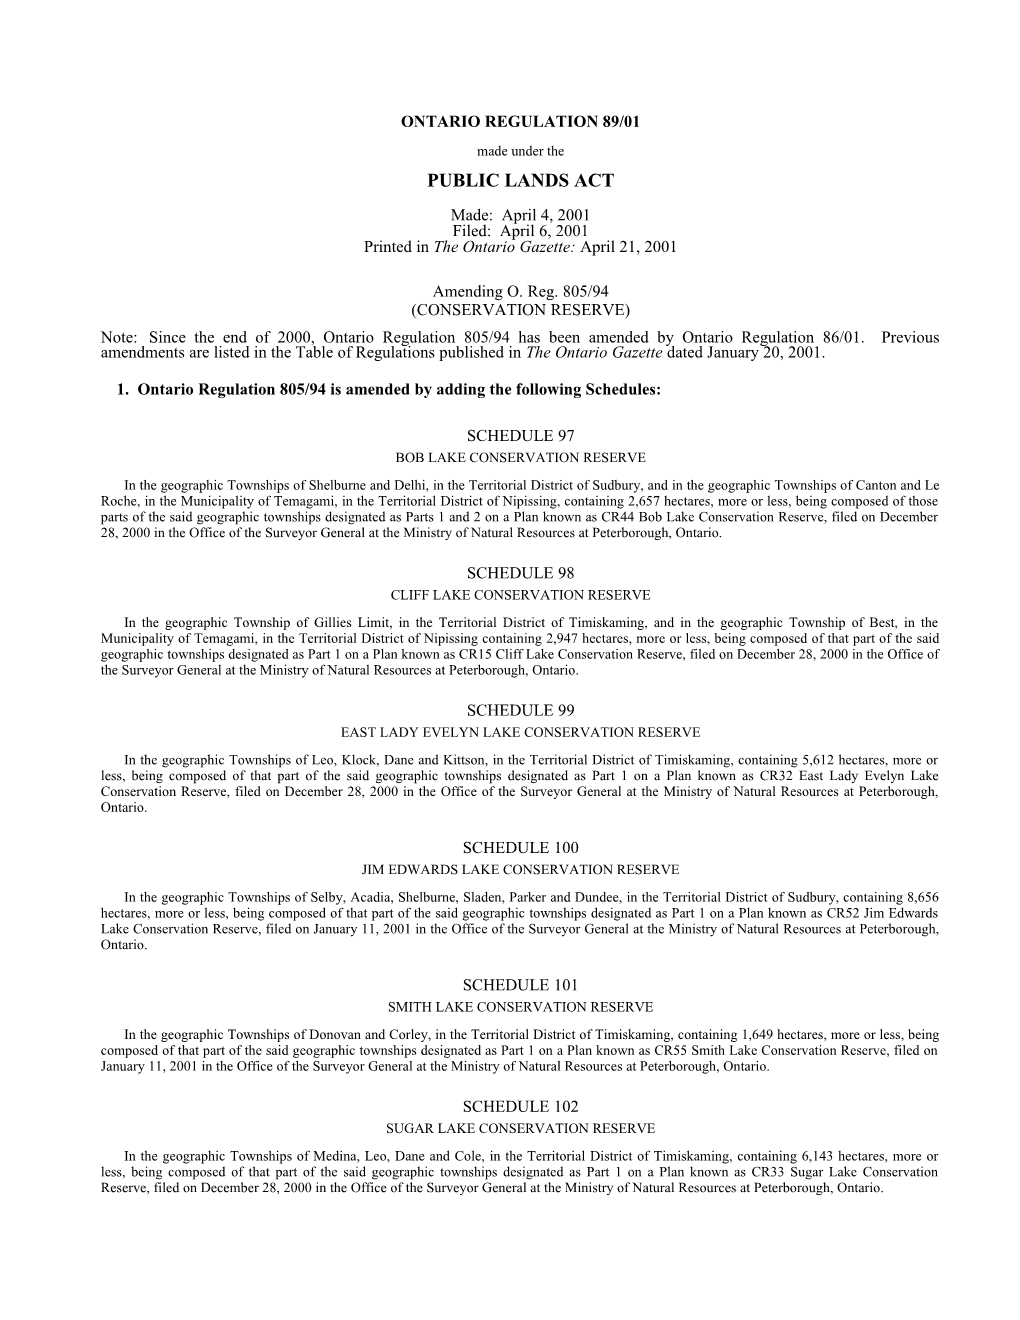 PUBLIC LANDS ACT - O. Reg. 89/01